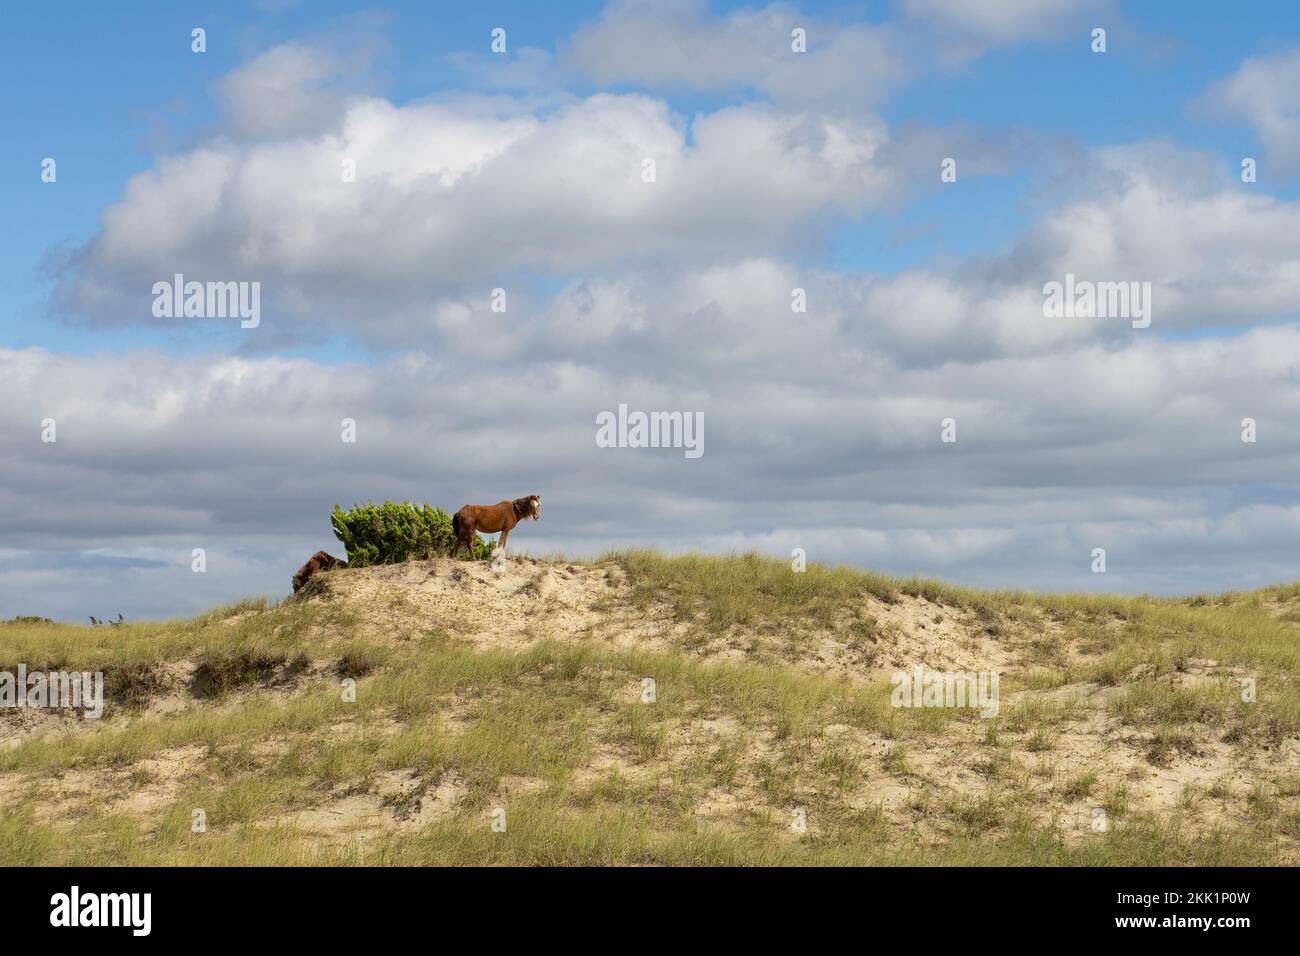 Wild horse (Equus ferus) standing on coastal beach hill with bush Stock Photo